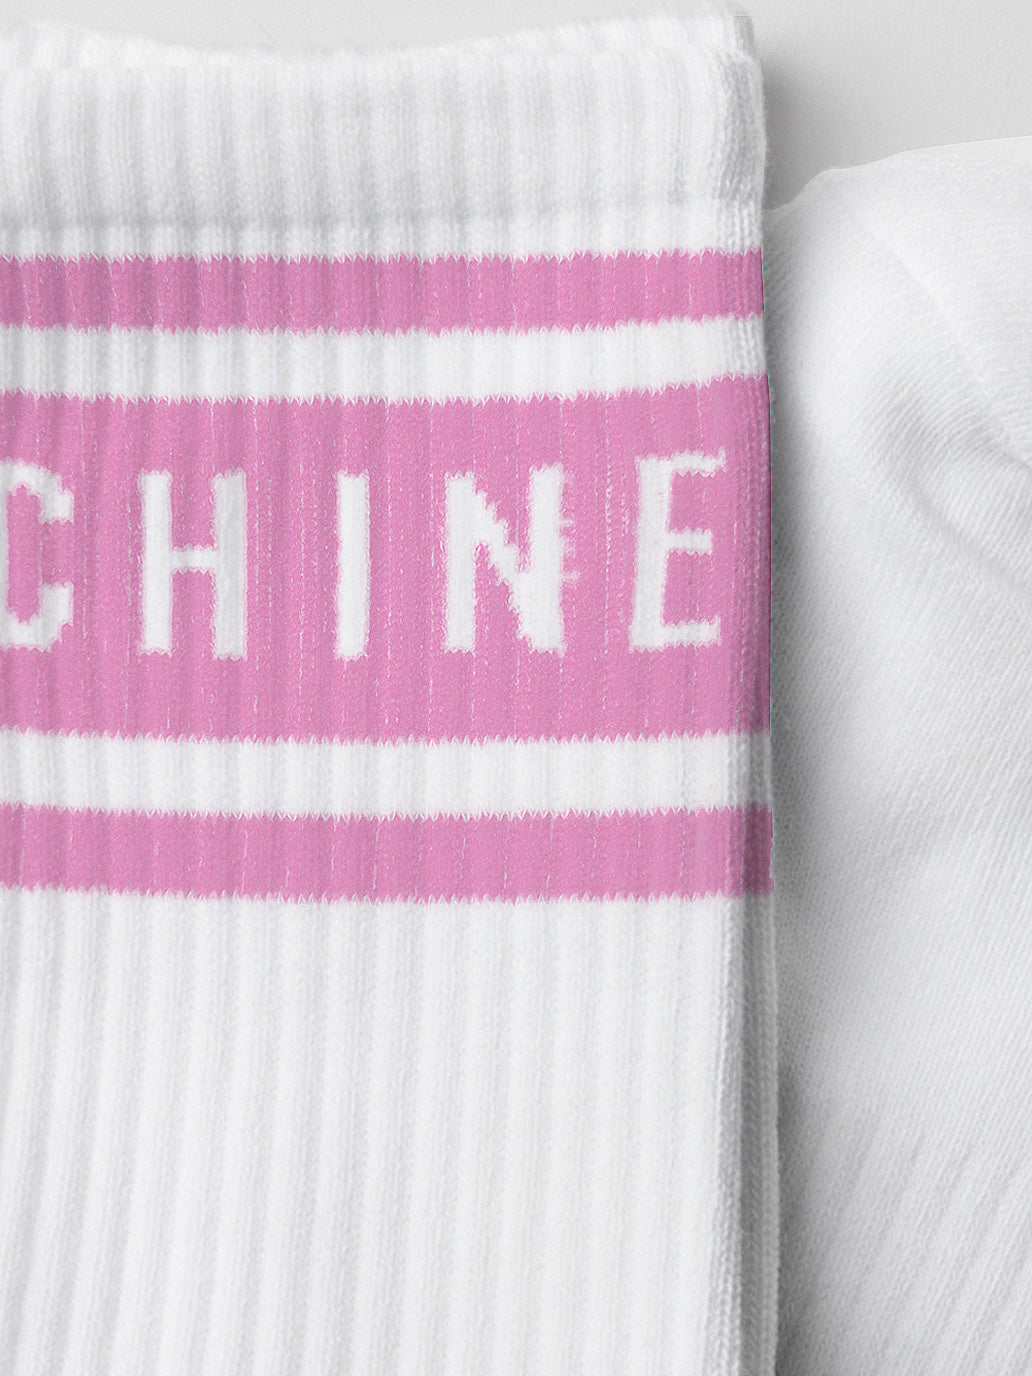 La Machine - Crew Socks - Giro Pink